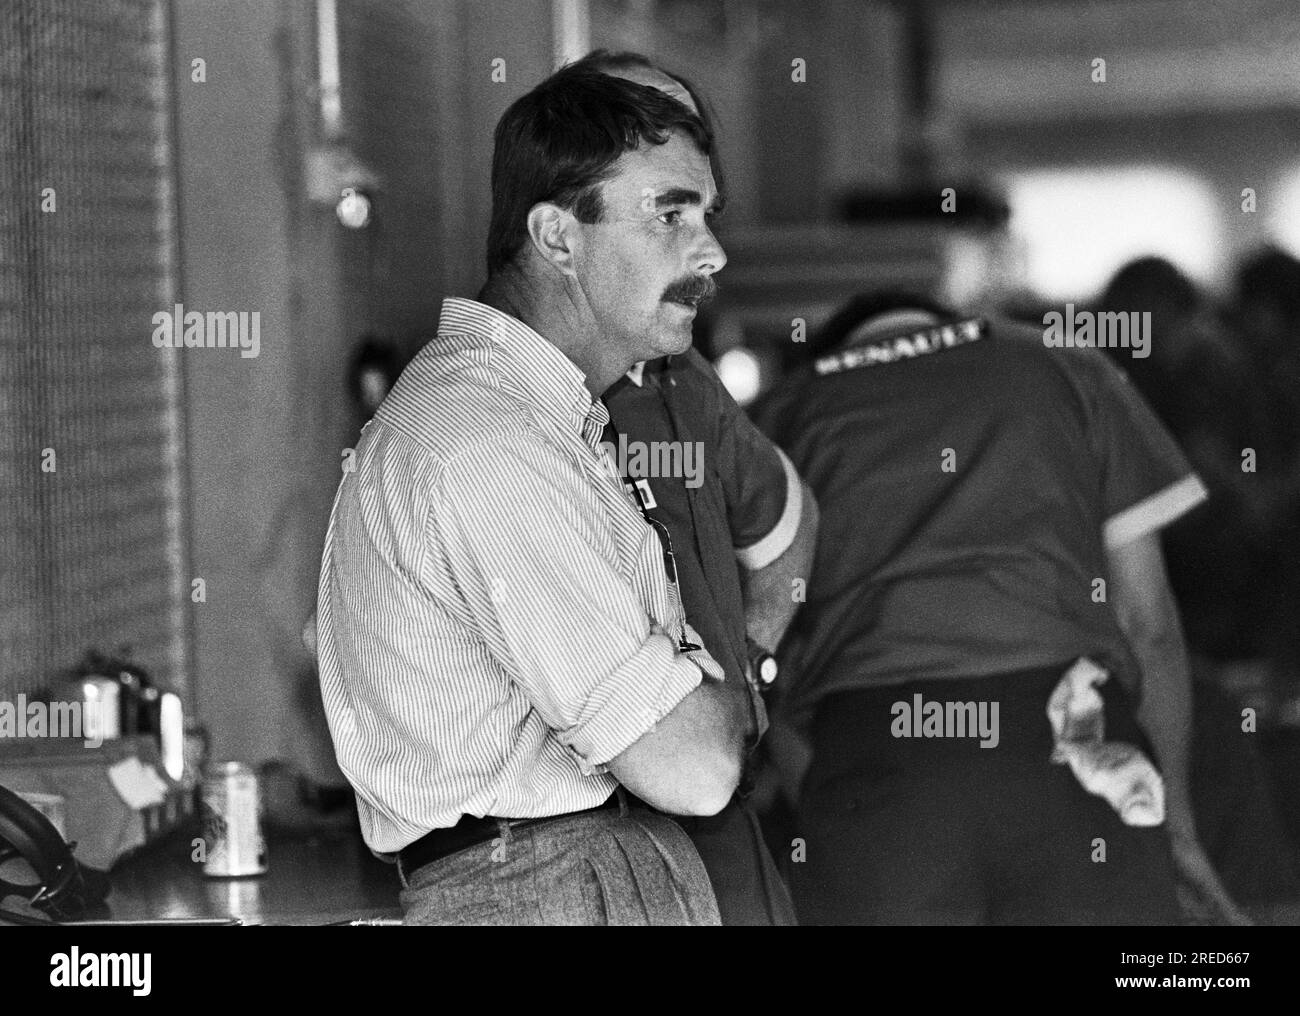 Germania, Hockenheim, 15/07/1992 Archivio: 35-39-37 test drive di Formula 1 presso l'Hockenheimring foto: Nigel Mansell, Williams Renault [traduzione automatizzata] Foto Stock